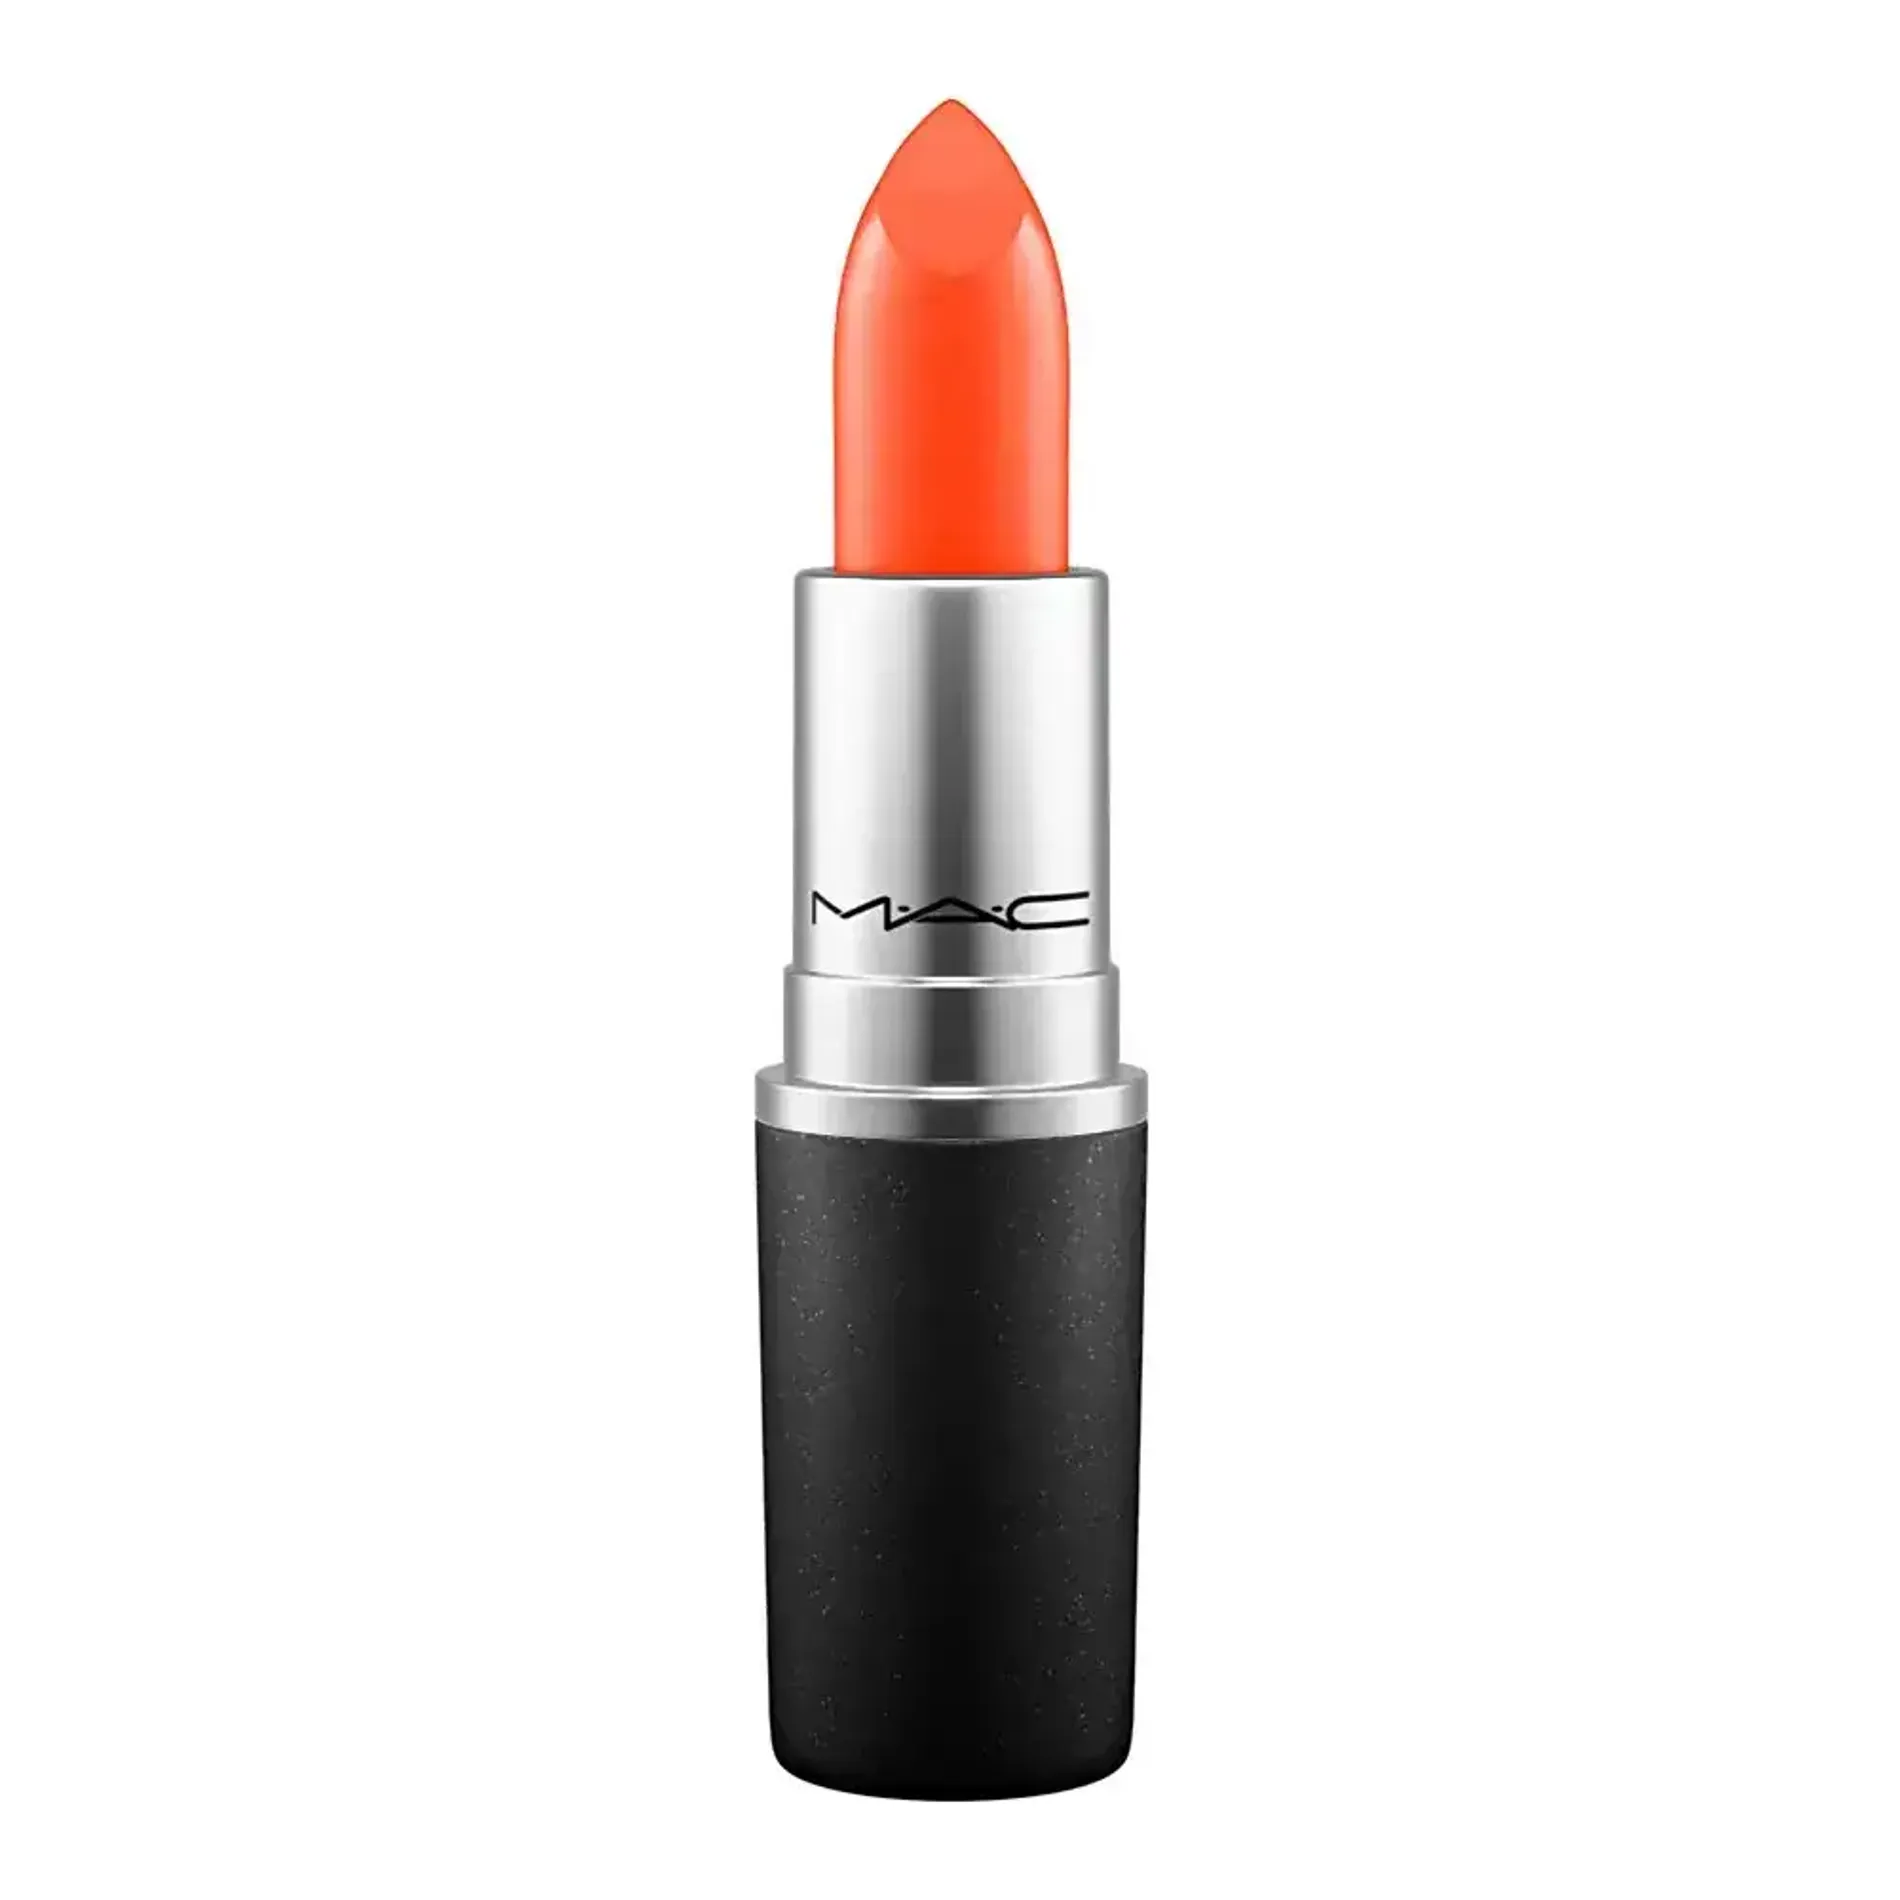 son-thoi-mac-amplified-creme-lipstick-3g-5